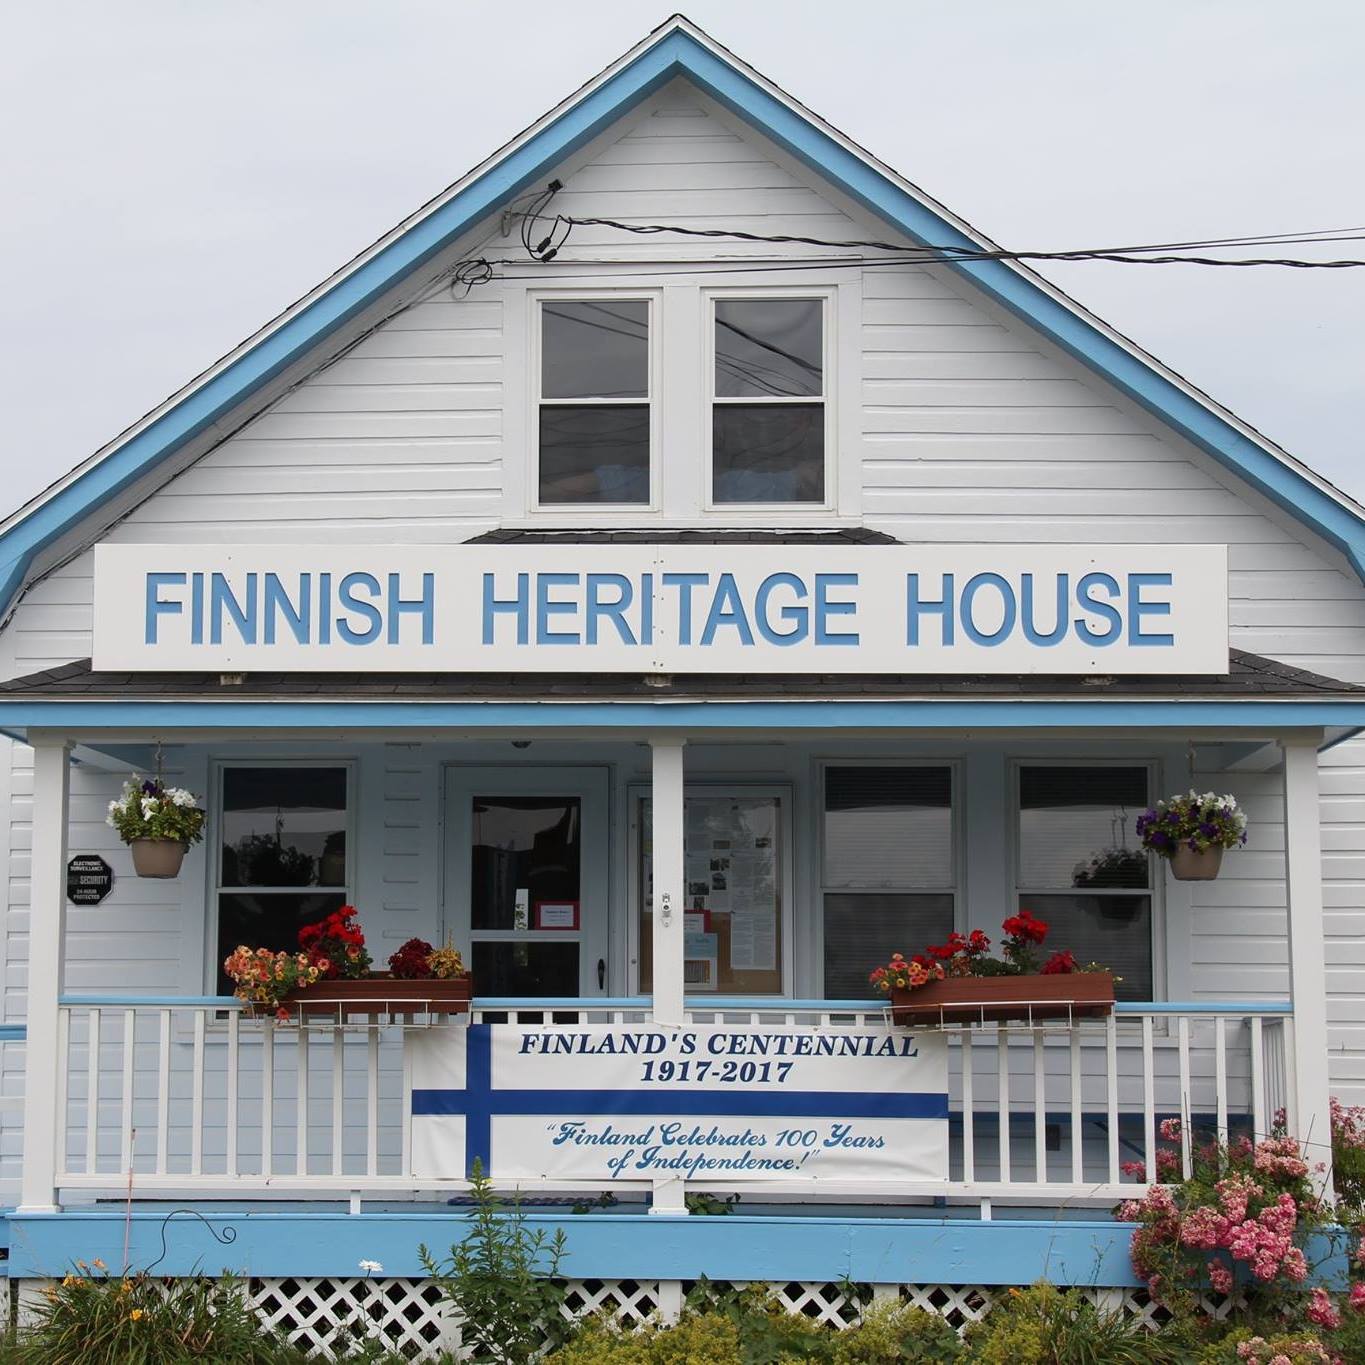 Finnish Organizations Near Me - Finnish Heritage House